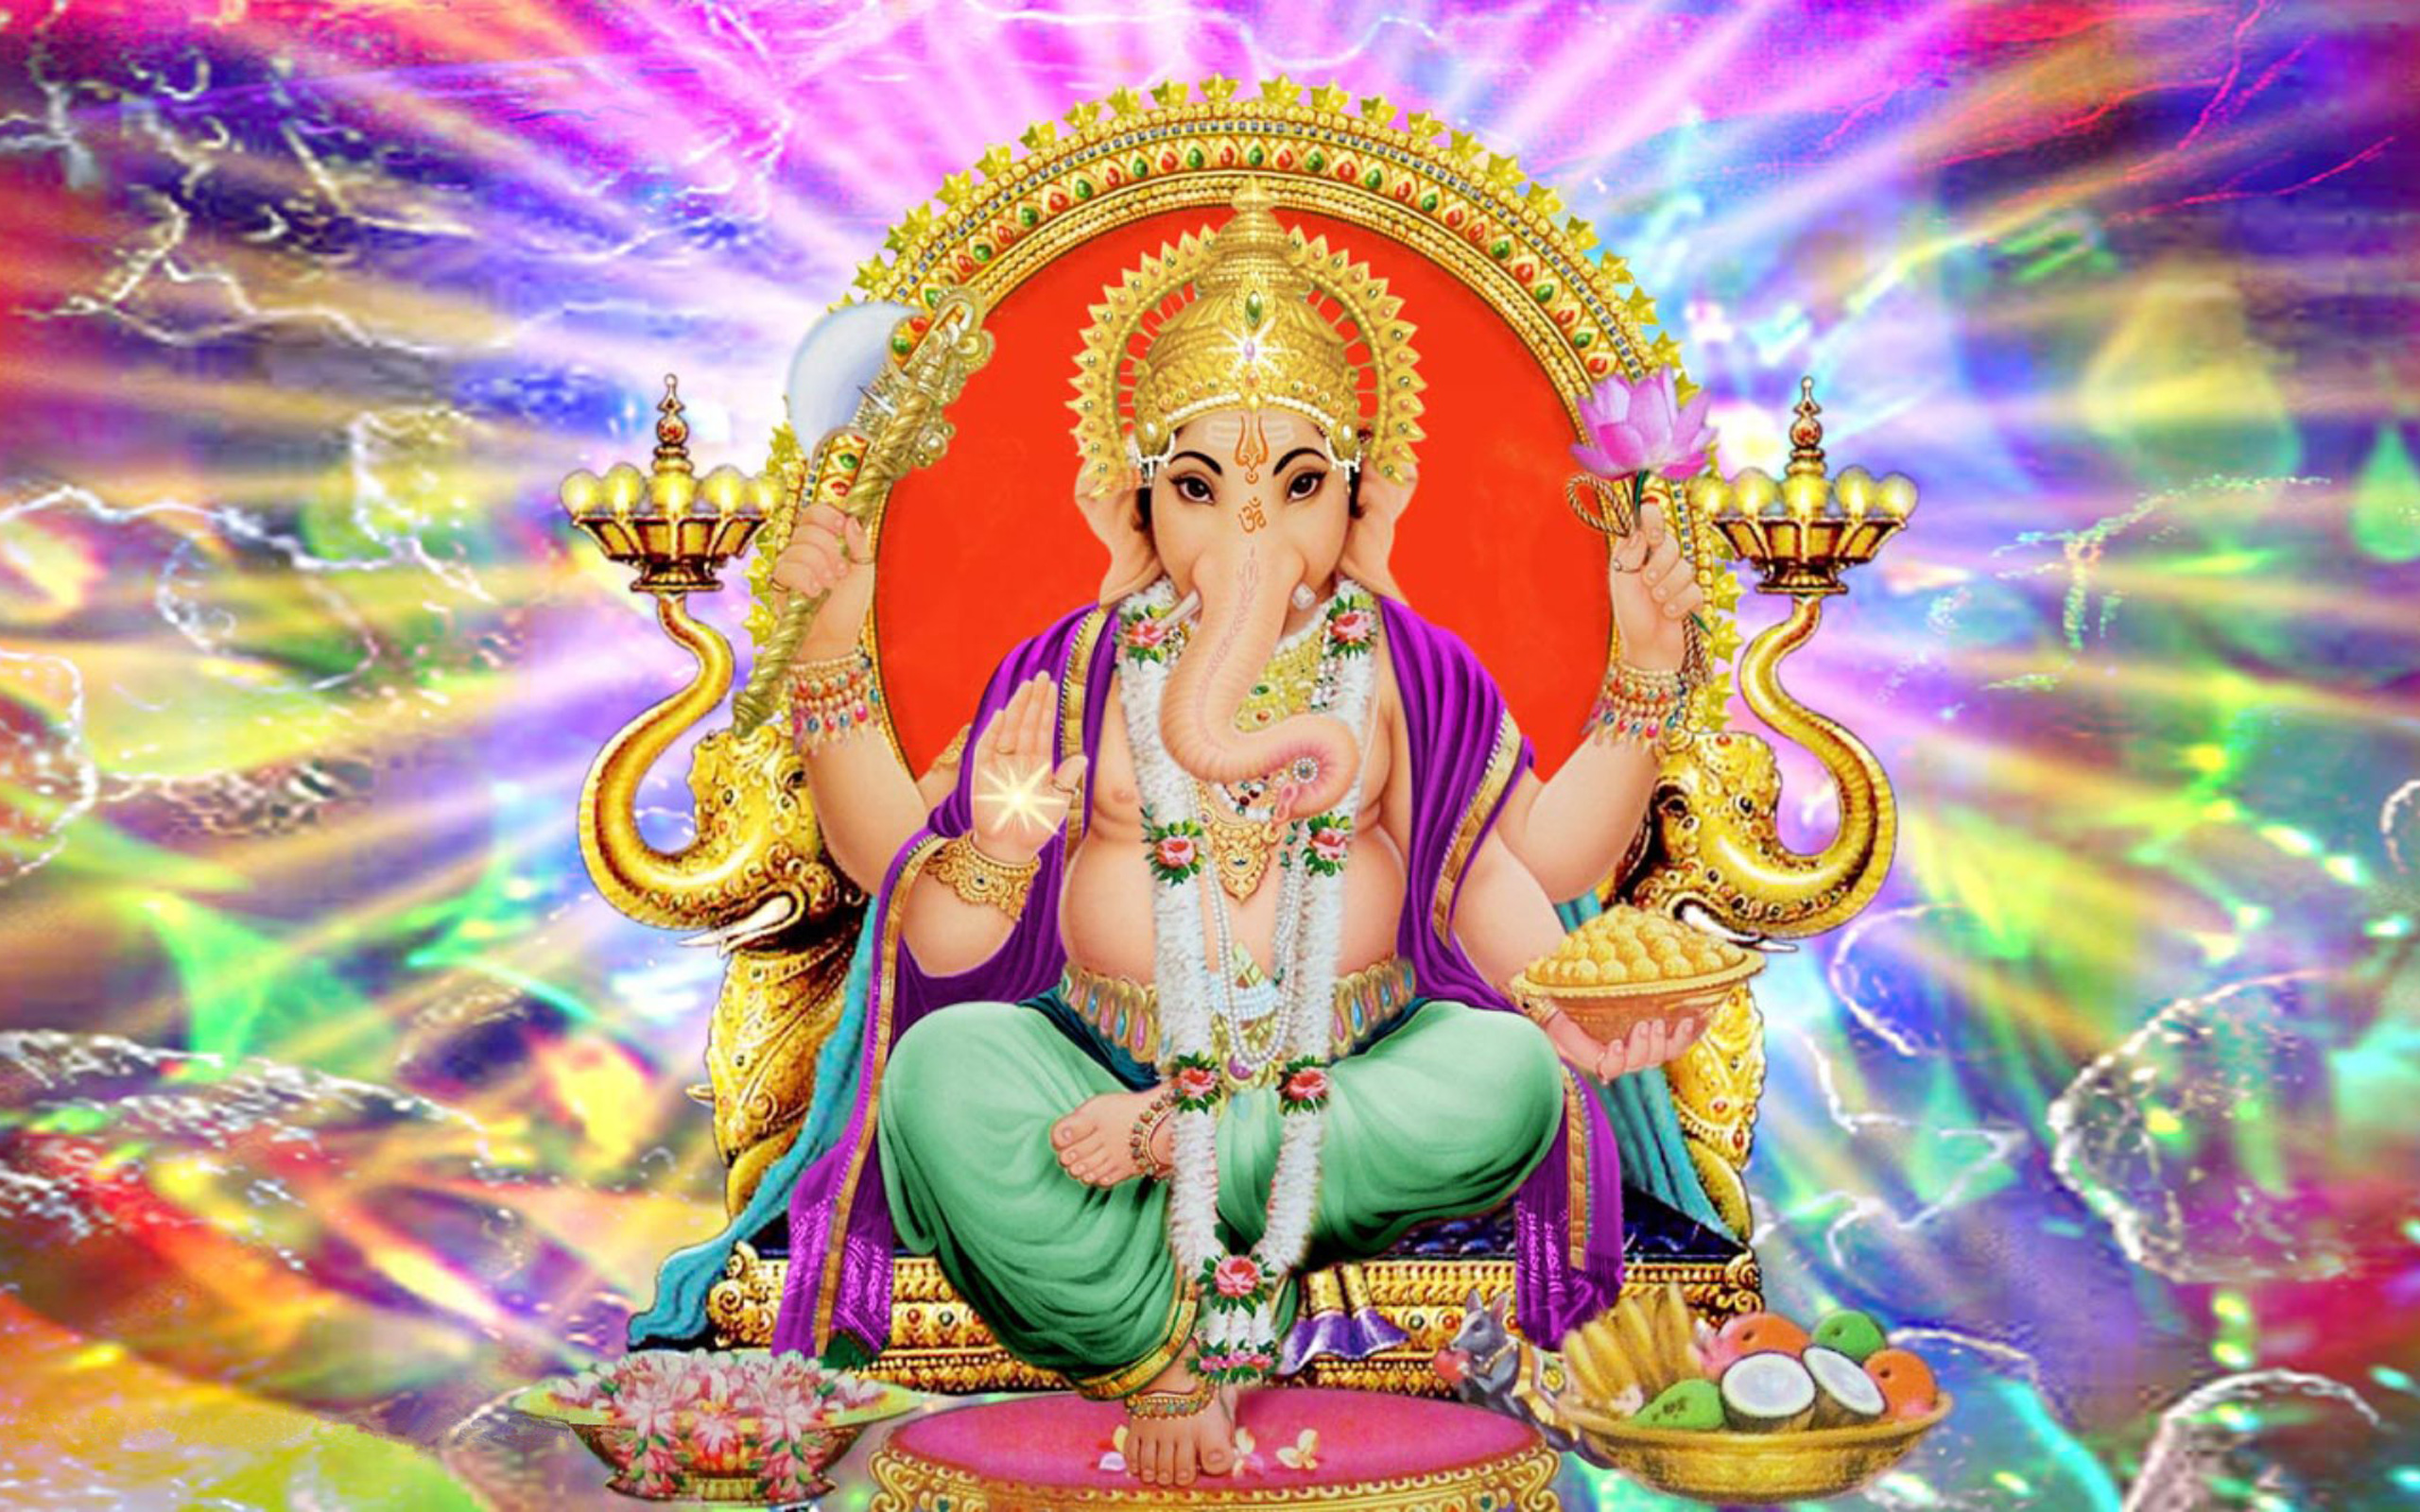 Mantram Ganesh Hindu Gods Images Wallpapers Hd 2560x1600 : Wallpapers13.com